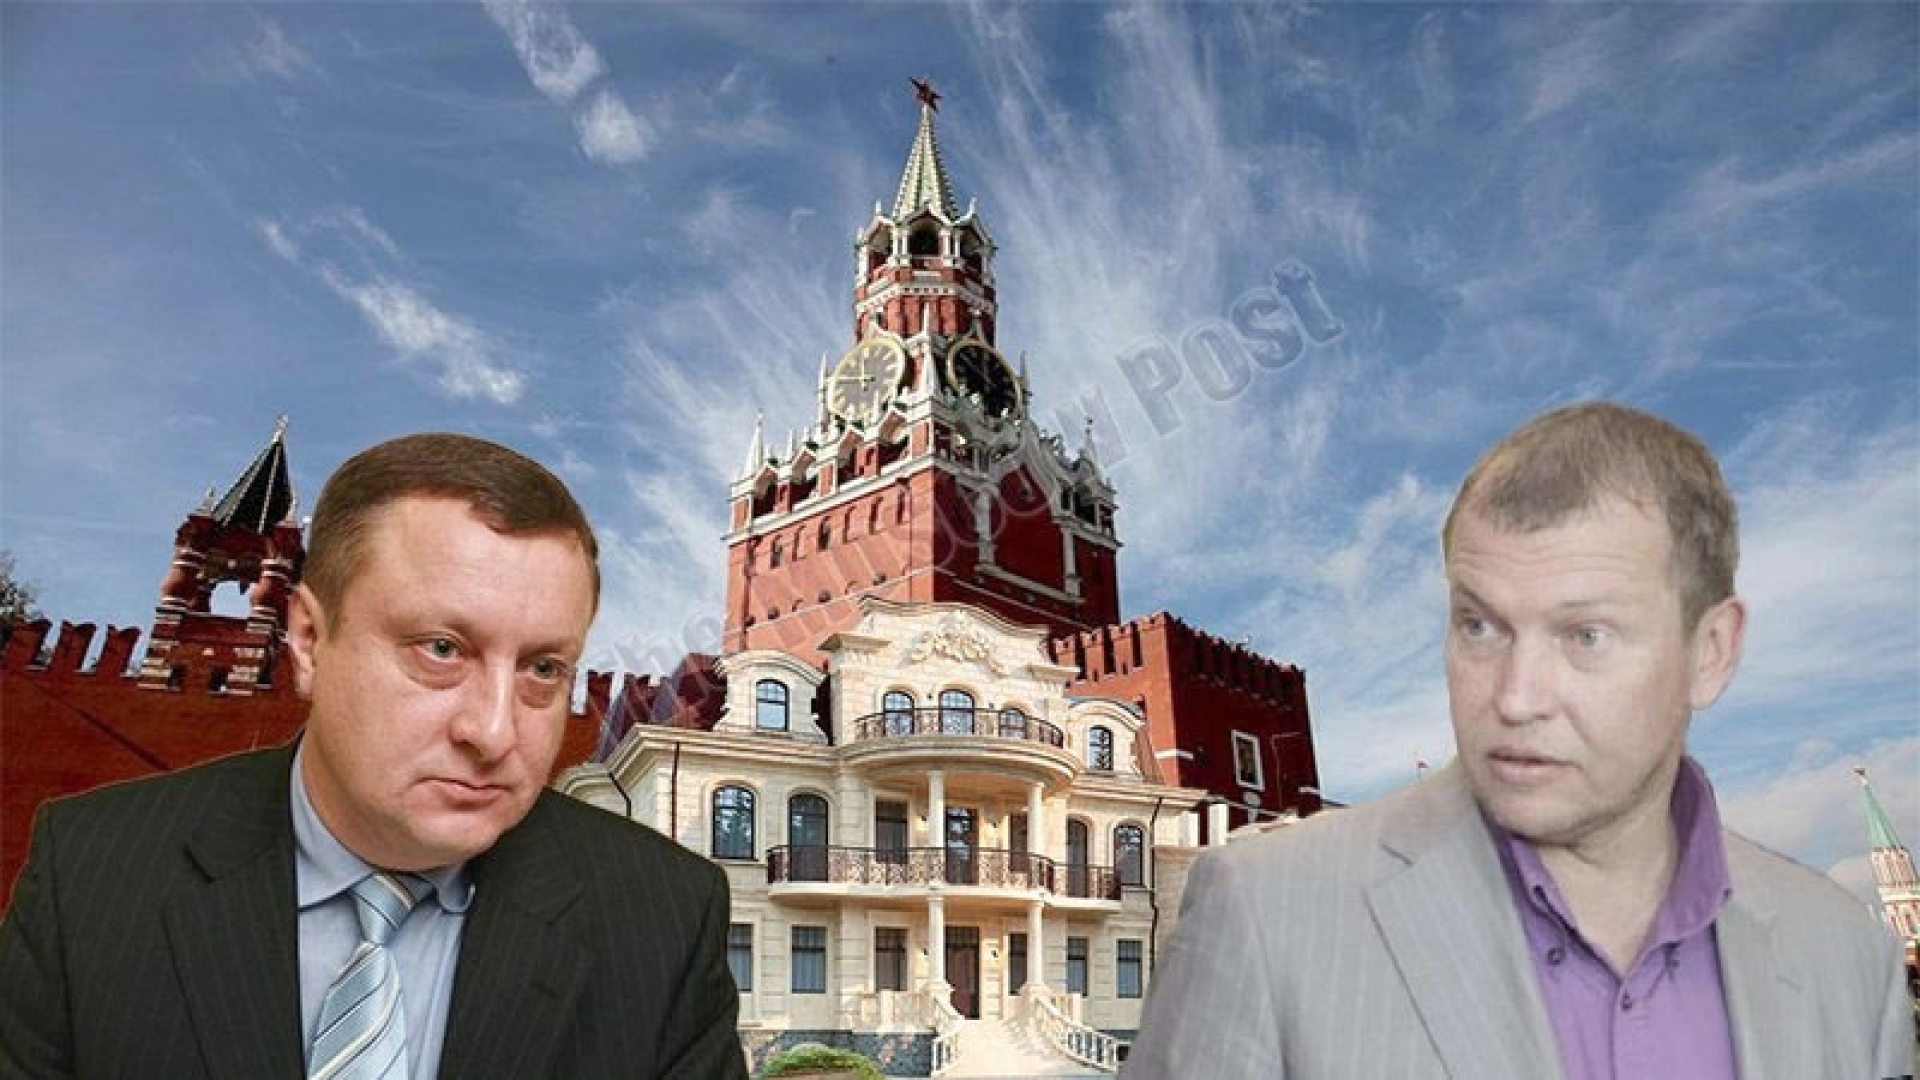 The Bidilo brothers look towards the Kremlin